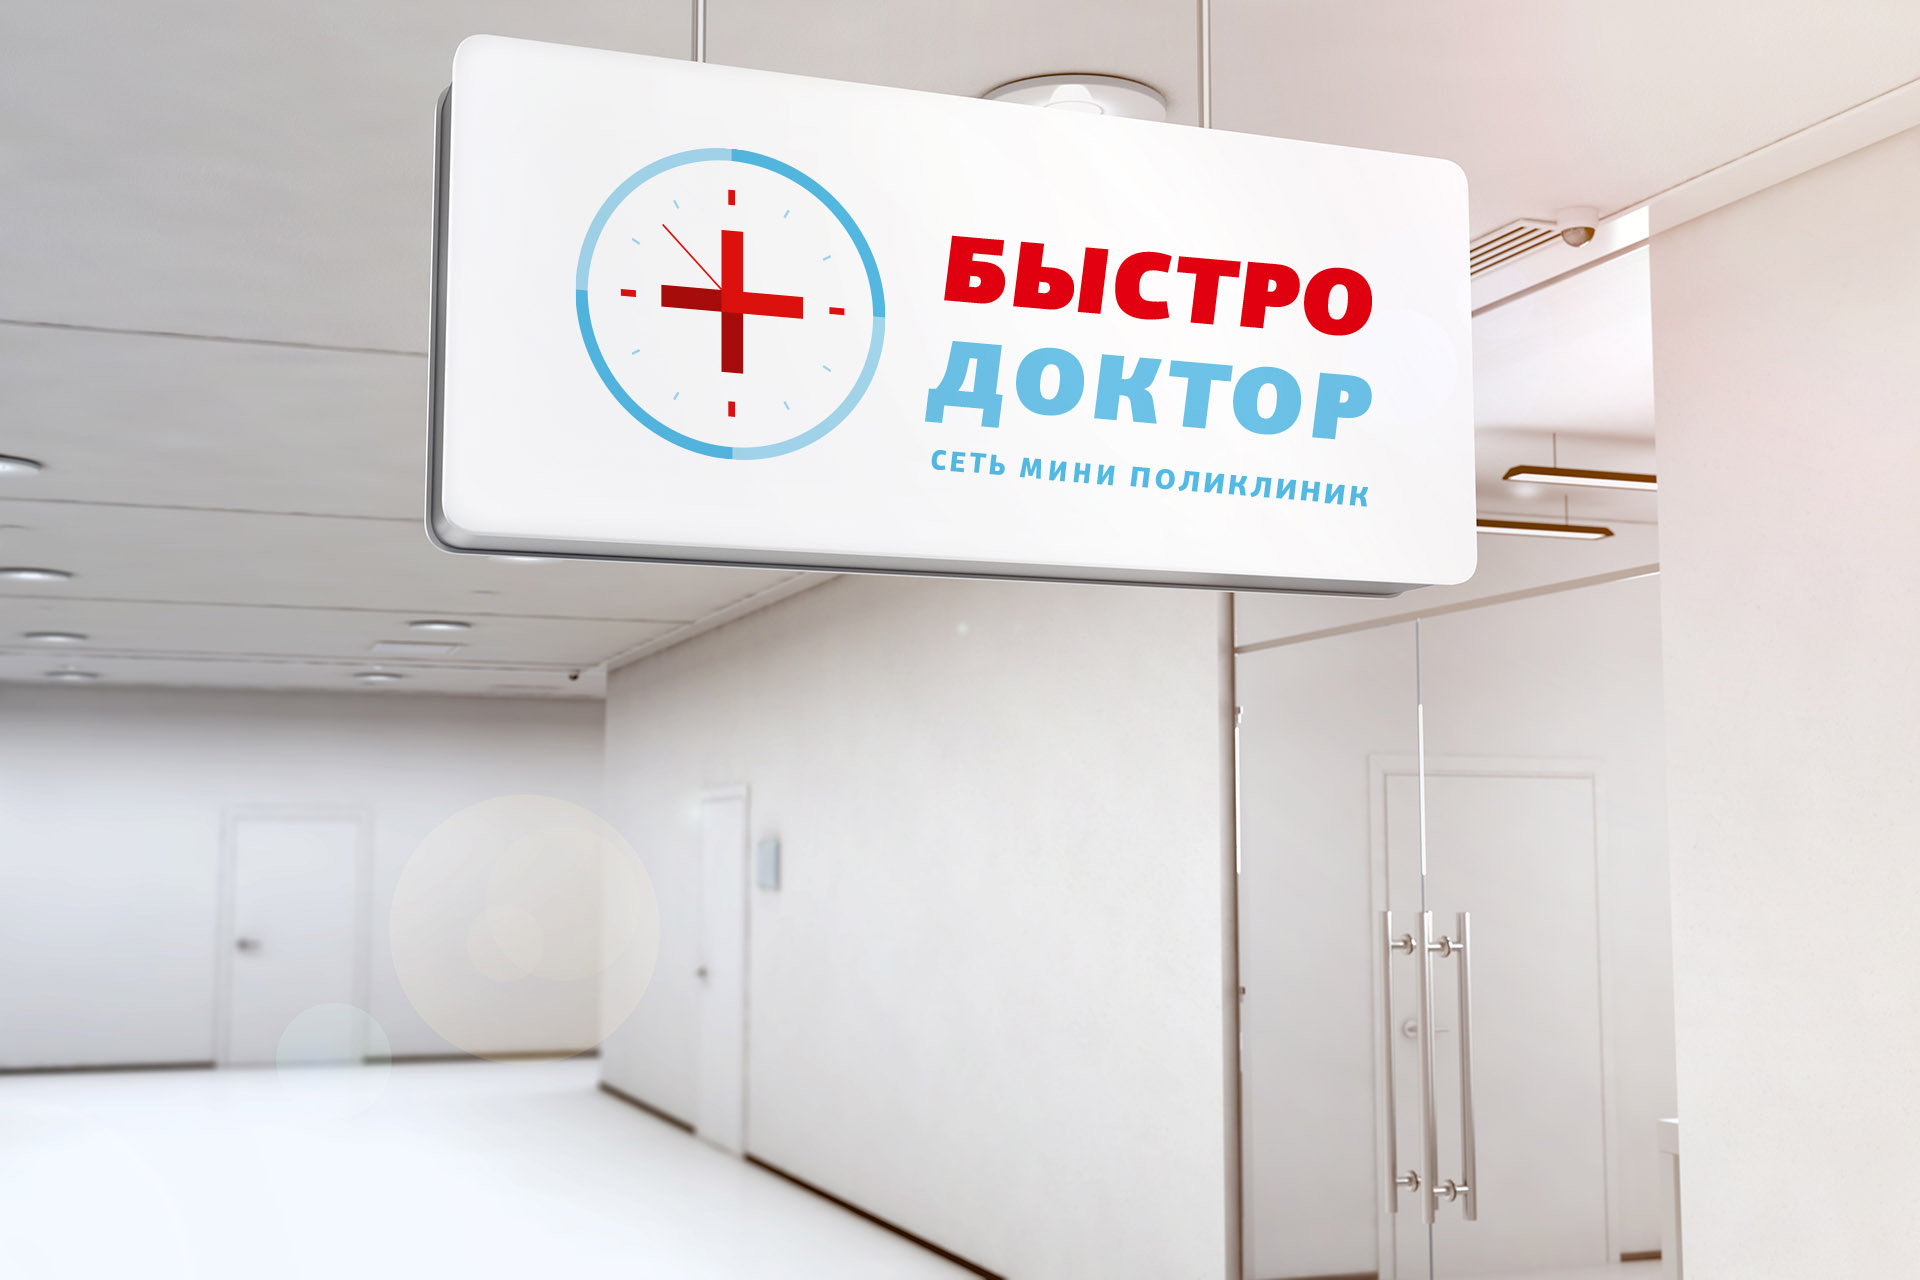 Дизайн логотипа поликлиники